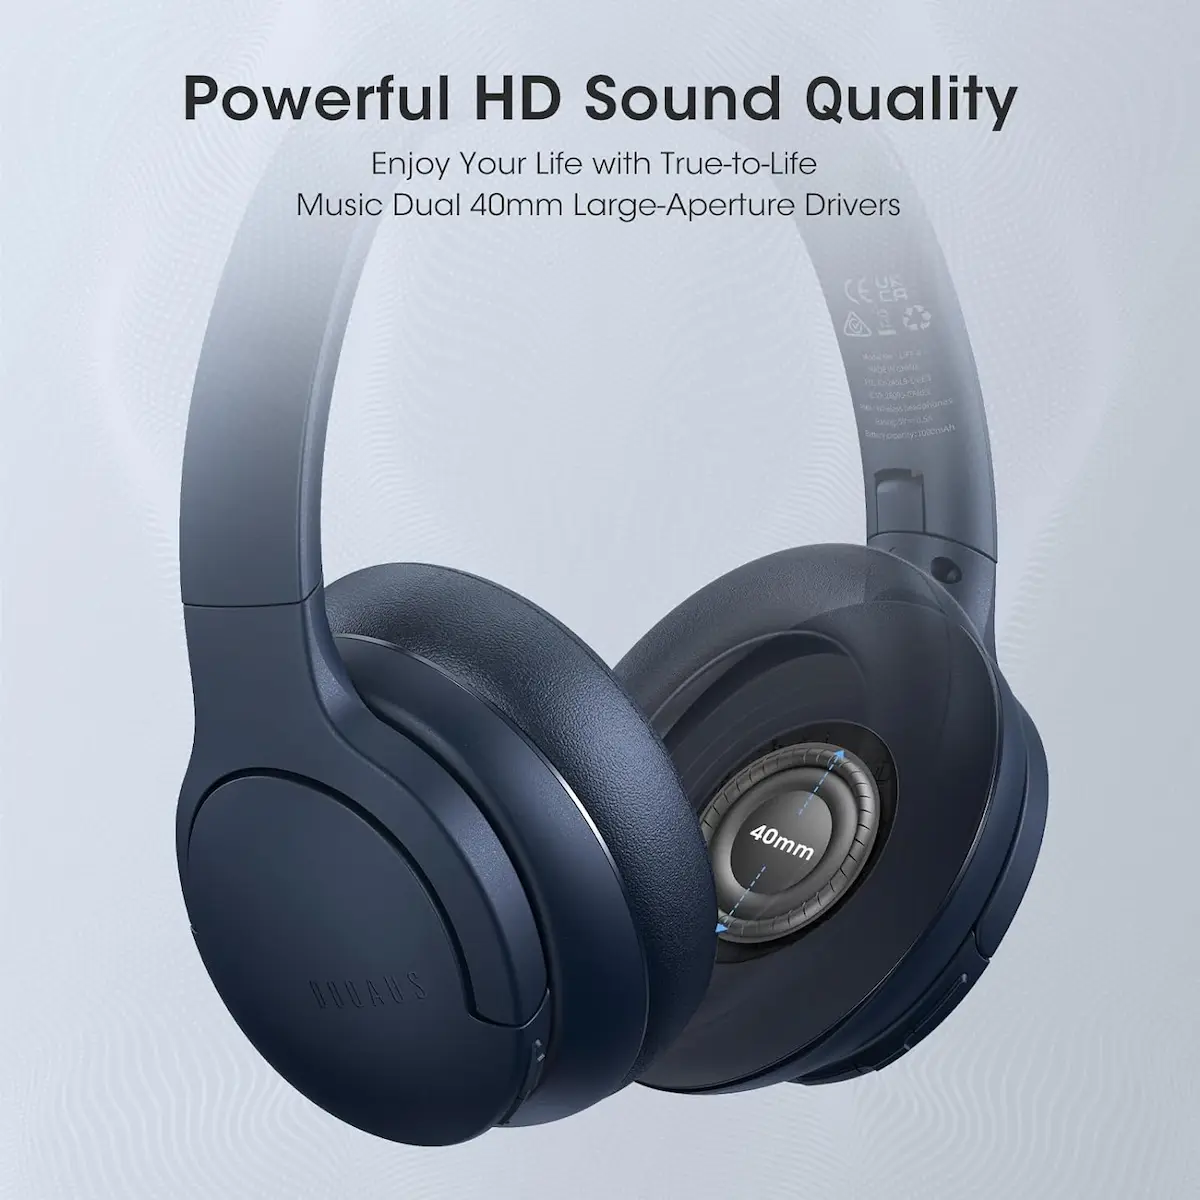 DOQAUS Impressive Hi-Fi Stereo Sound with 3 EQ Modes